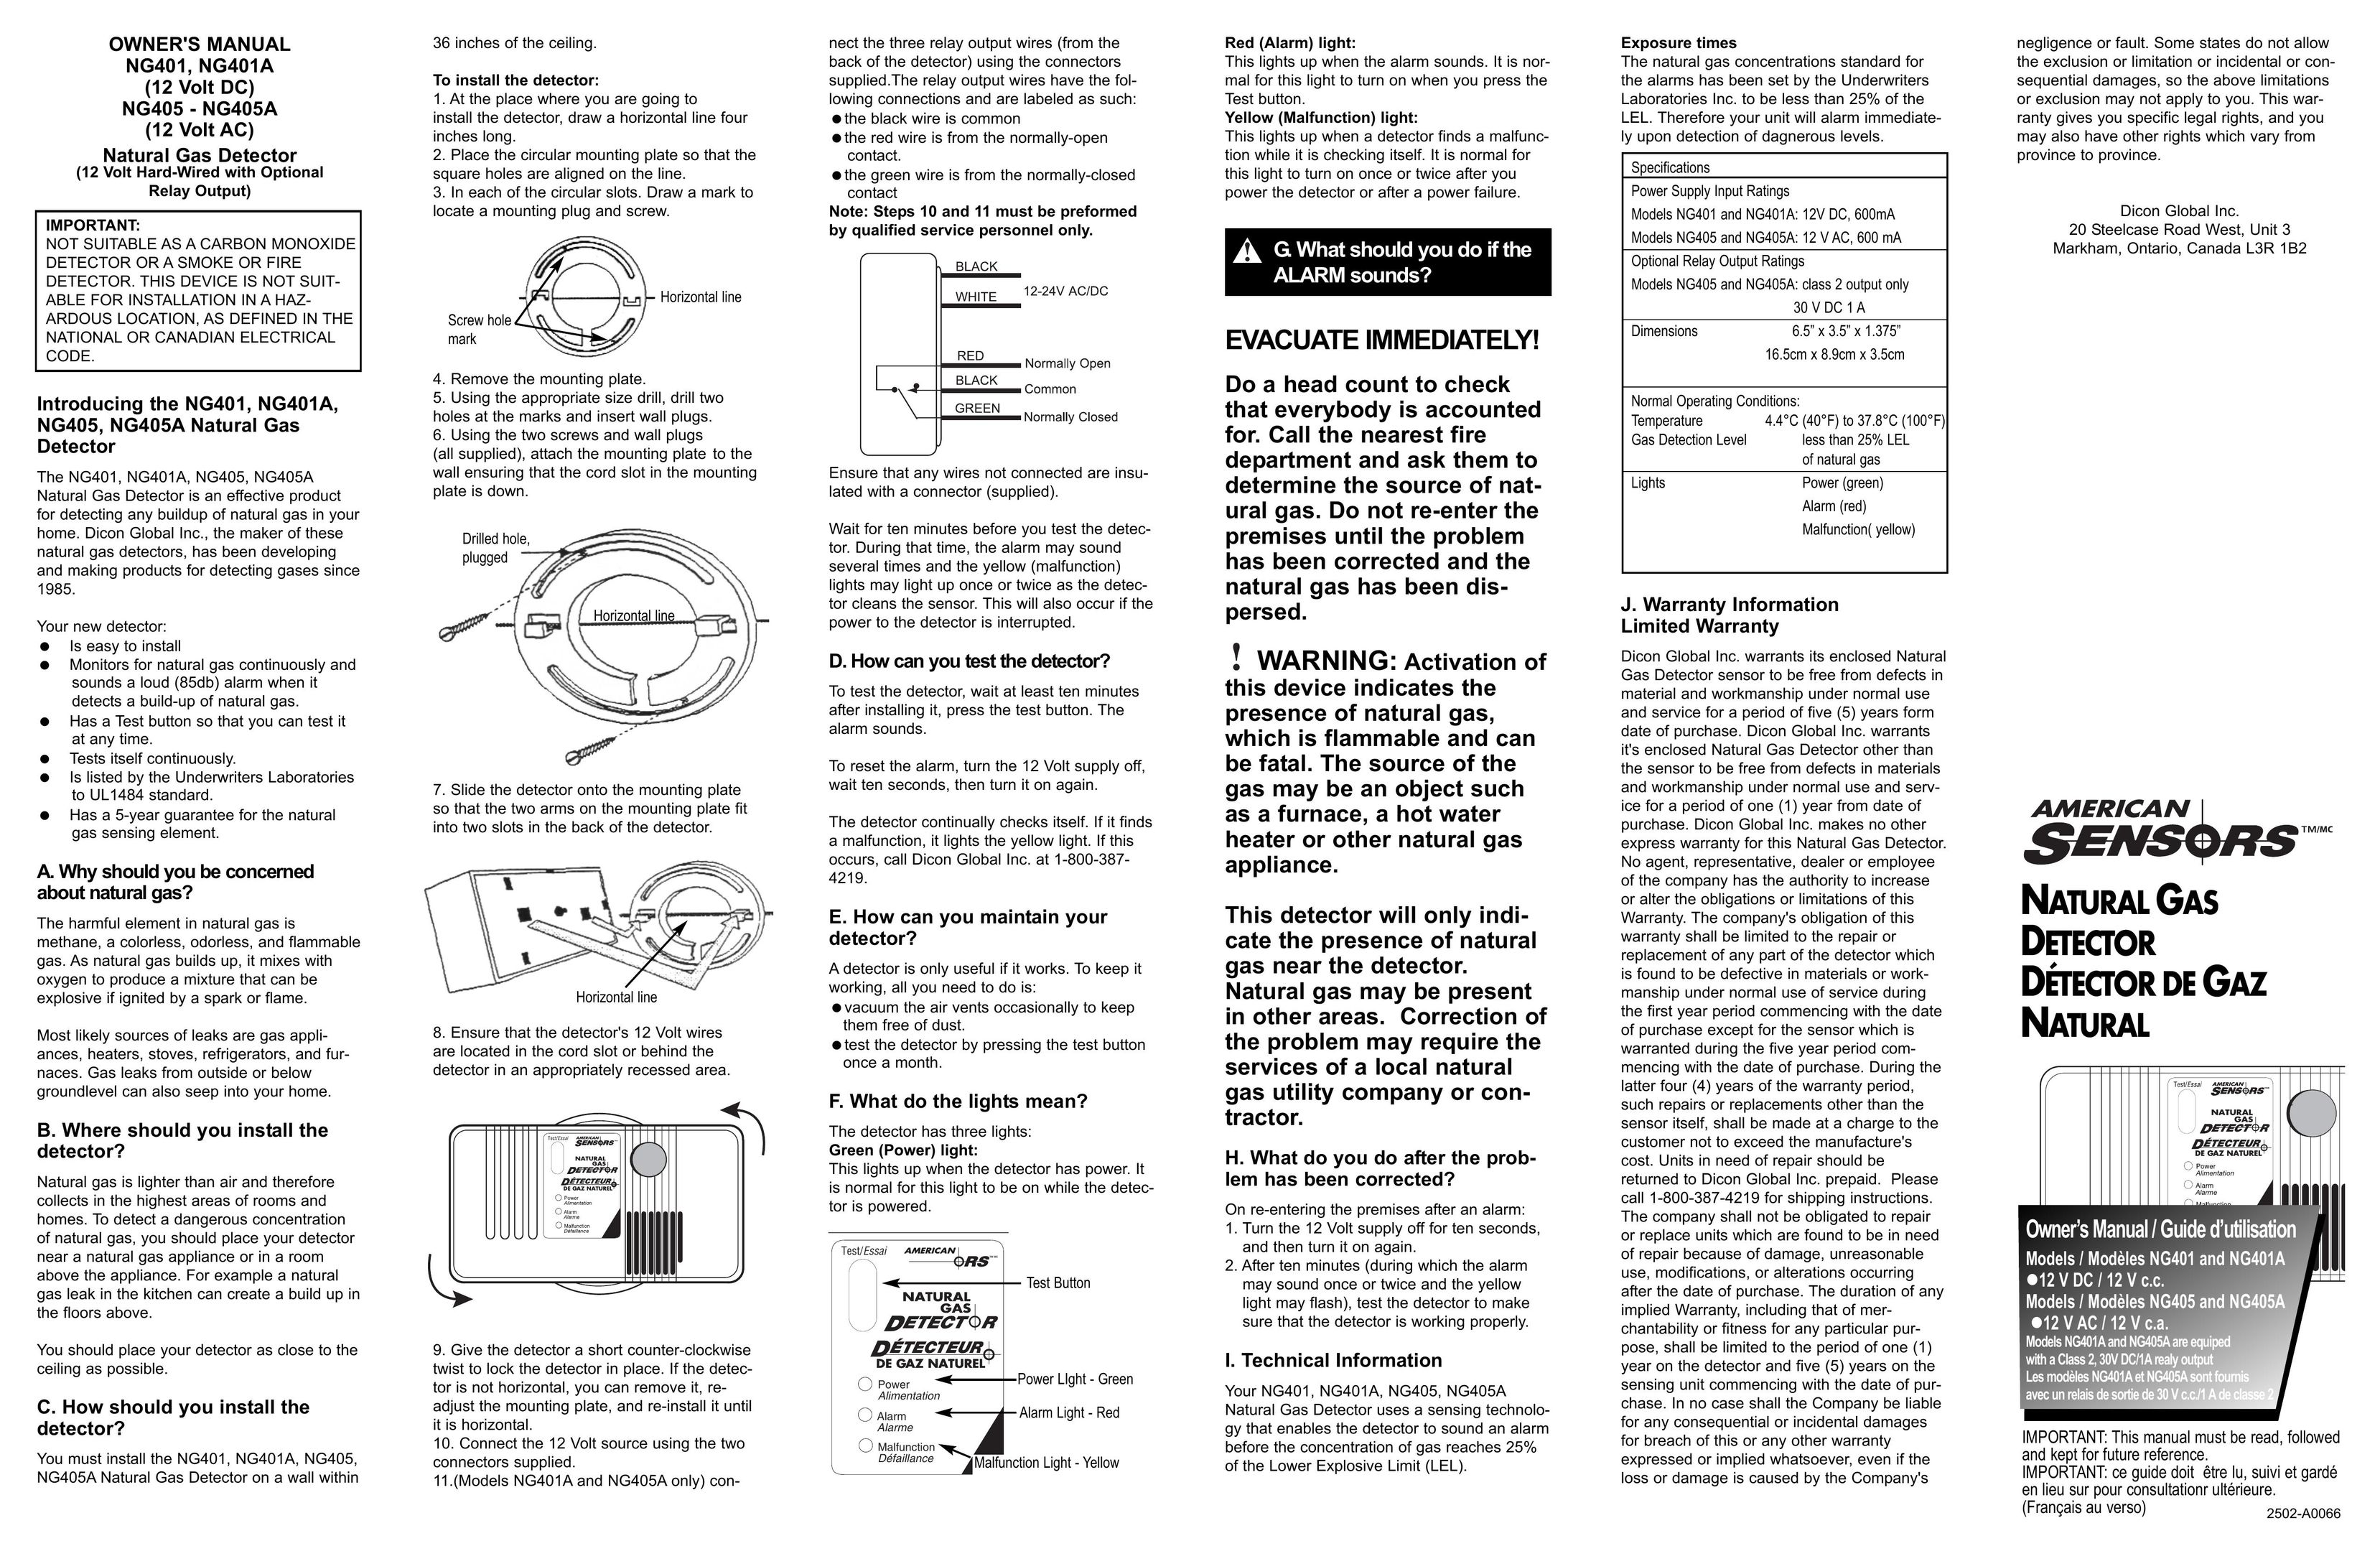 American Sensor NG401 Carbon Monoxide Alarm User Manual